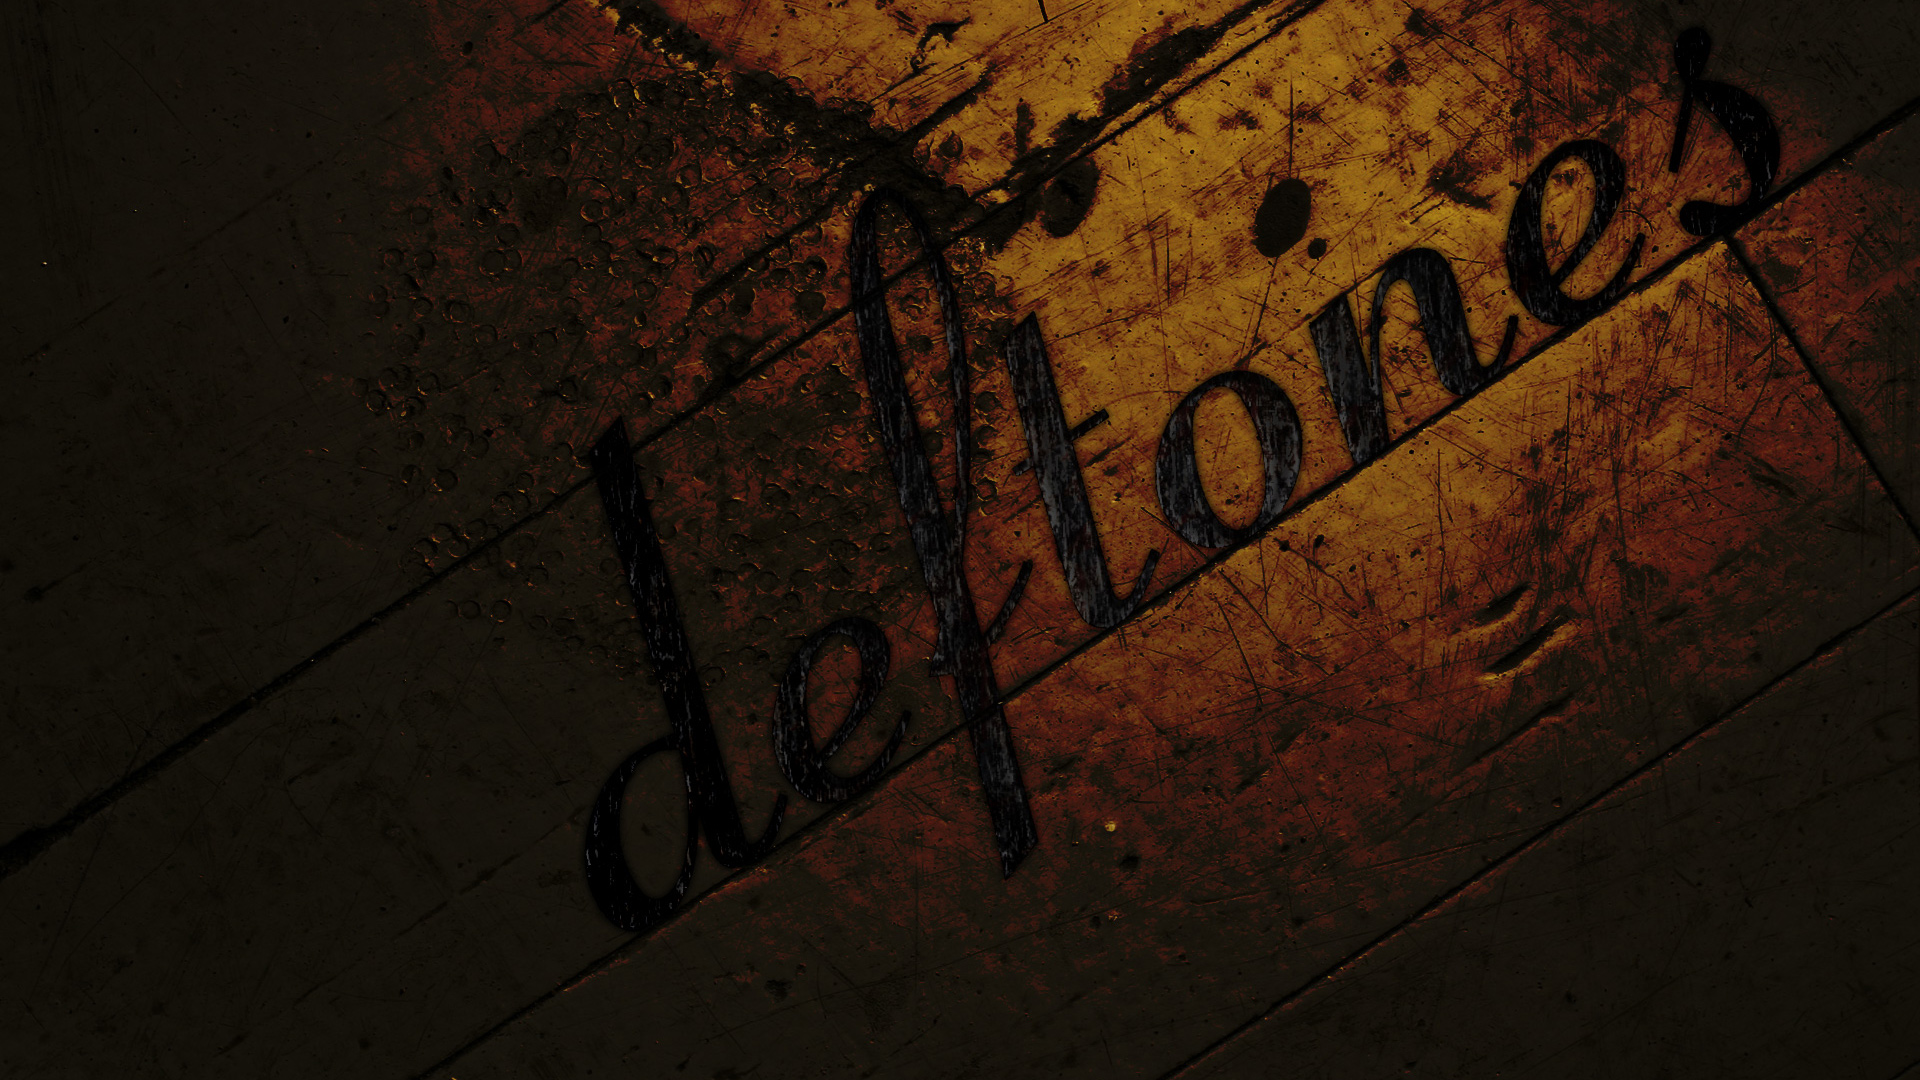 Music Deftones HD Wallpaper | Background Image